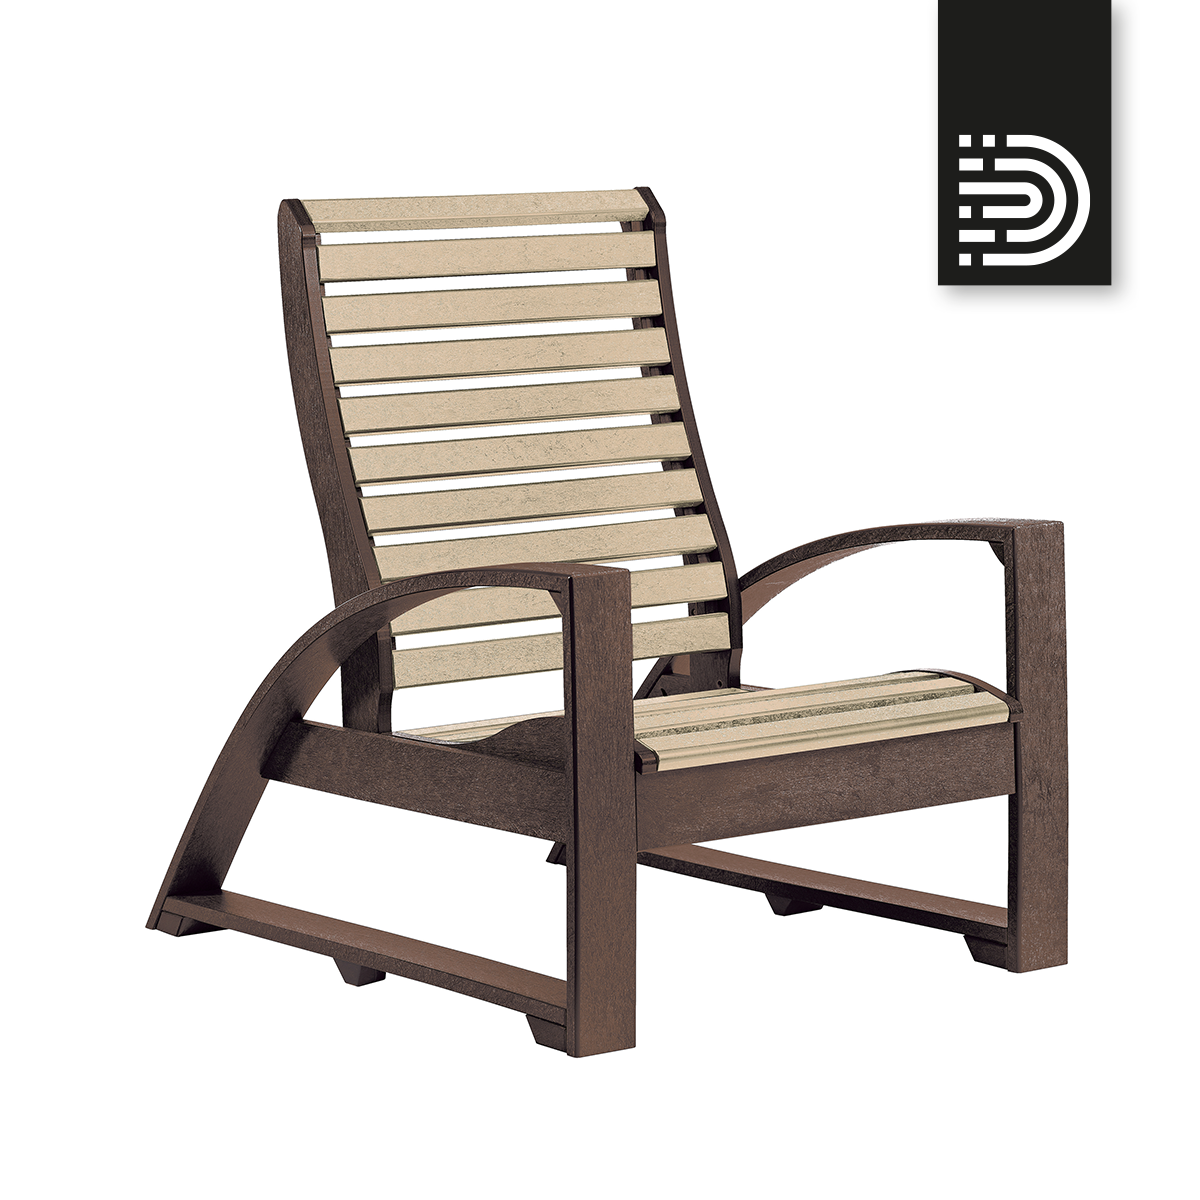 C30 Lounge Chair - choco 16/ beige 07